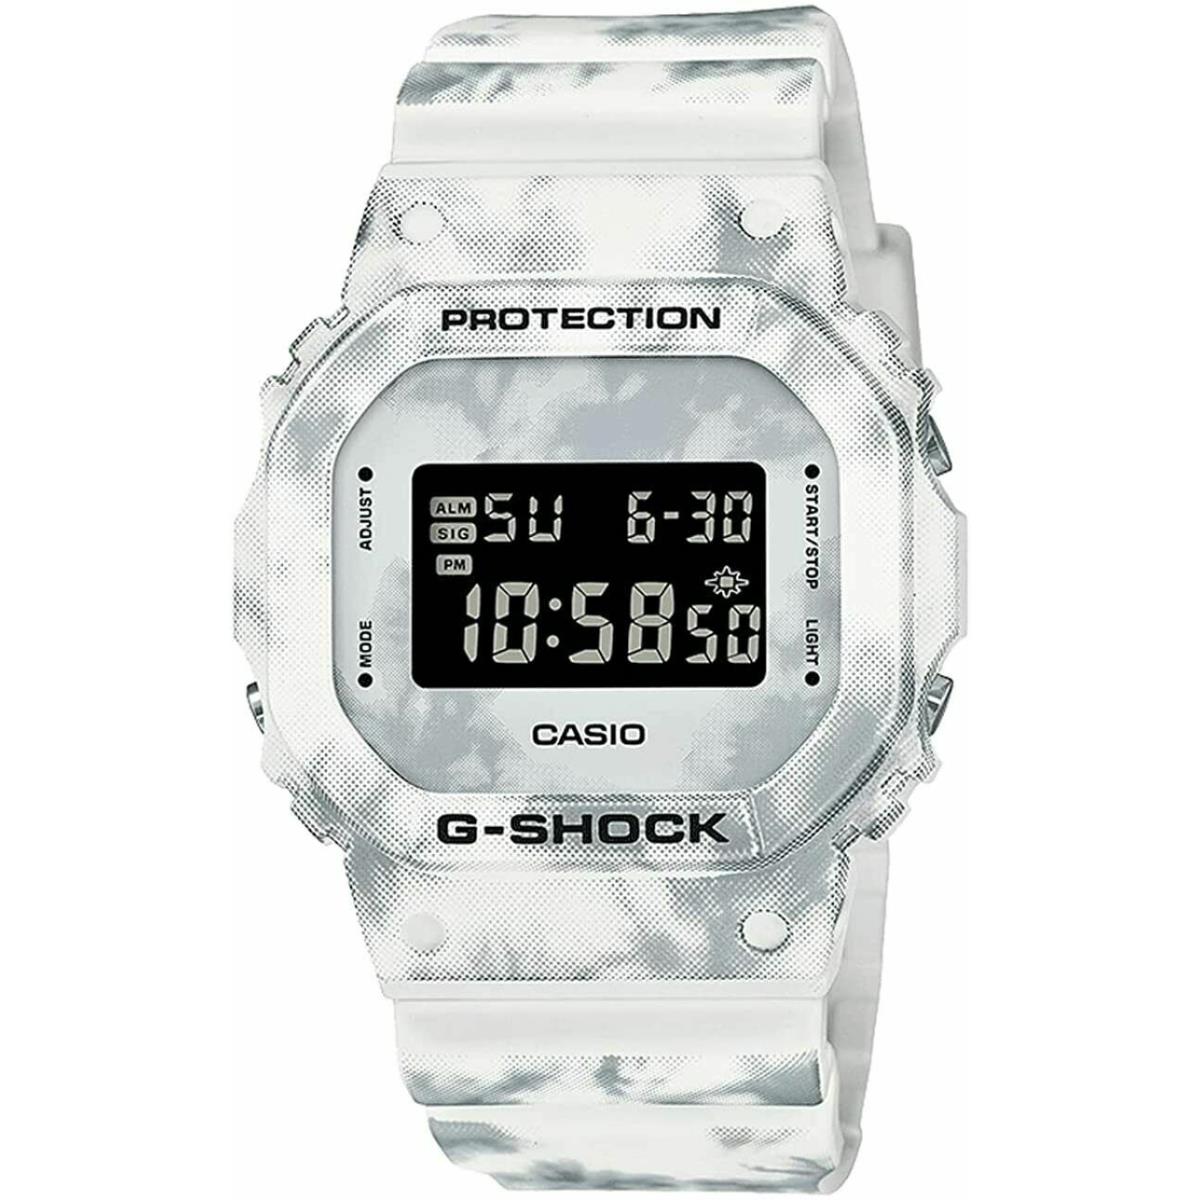 Casio G-shock Digital Wintery Camouflage Limited Edition Watch DW5600GC-7